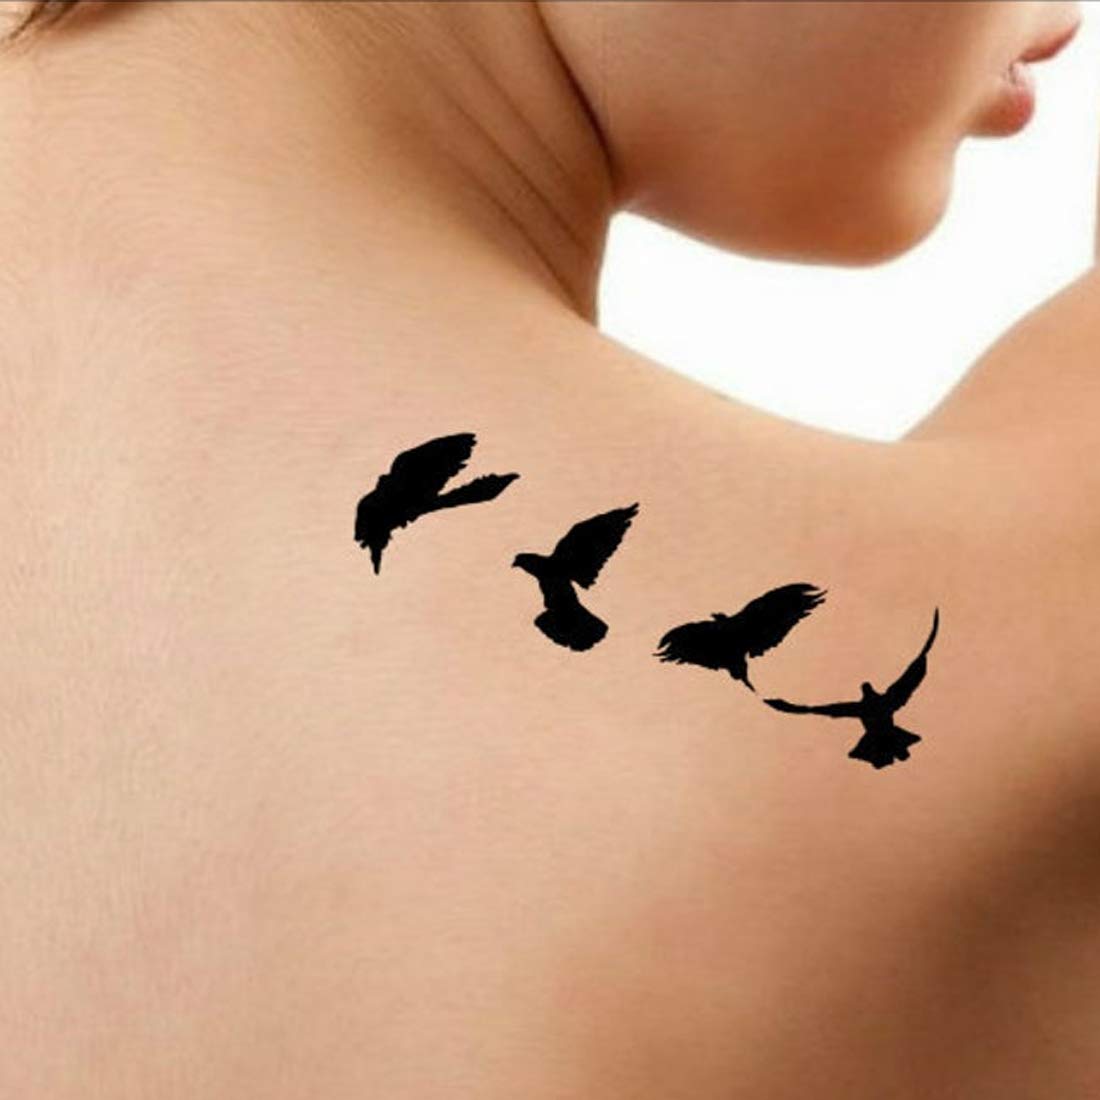 Tattoo Studio In Jaipur - Flying Dragon Tattoo Done By Xpose Tattoo Jaipur.  - YouTube